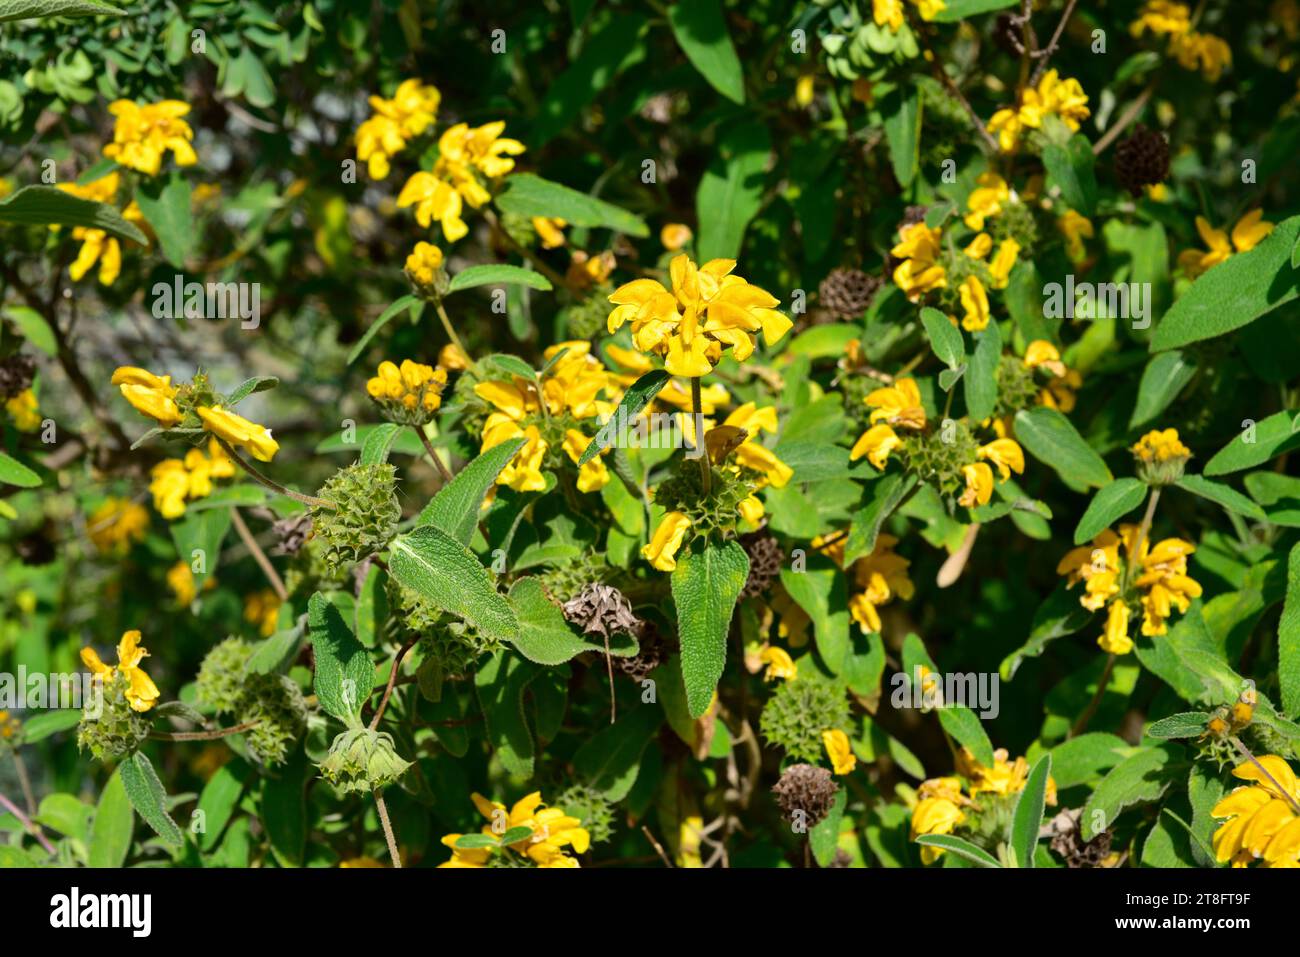 Cyprus sage (Phlomis cypria) is an evergreen shrub endemic to Cyprus. Flowering plant. Stock Photo